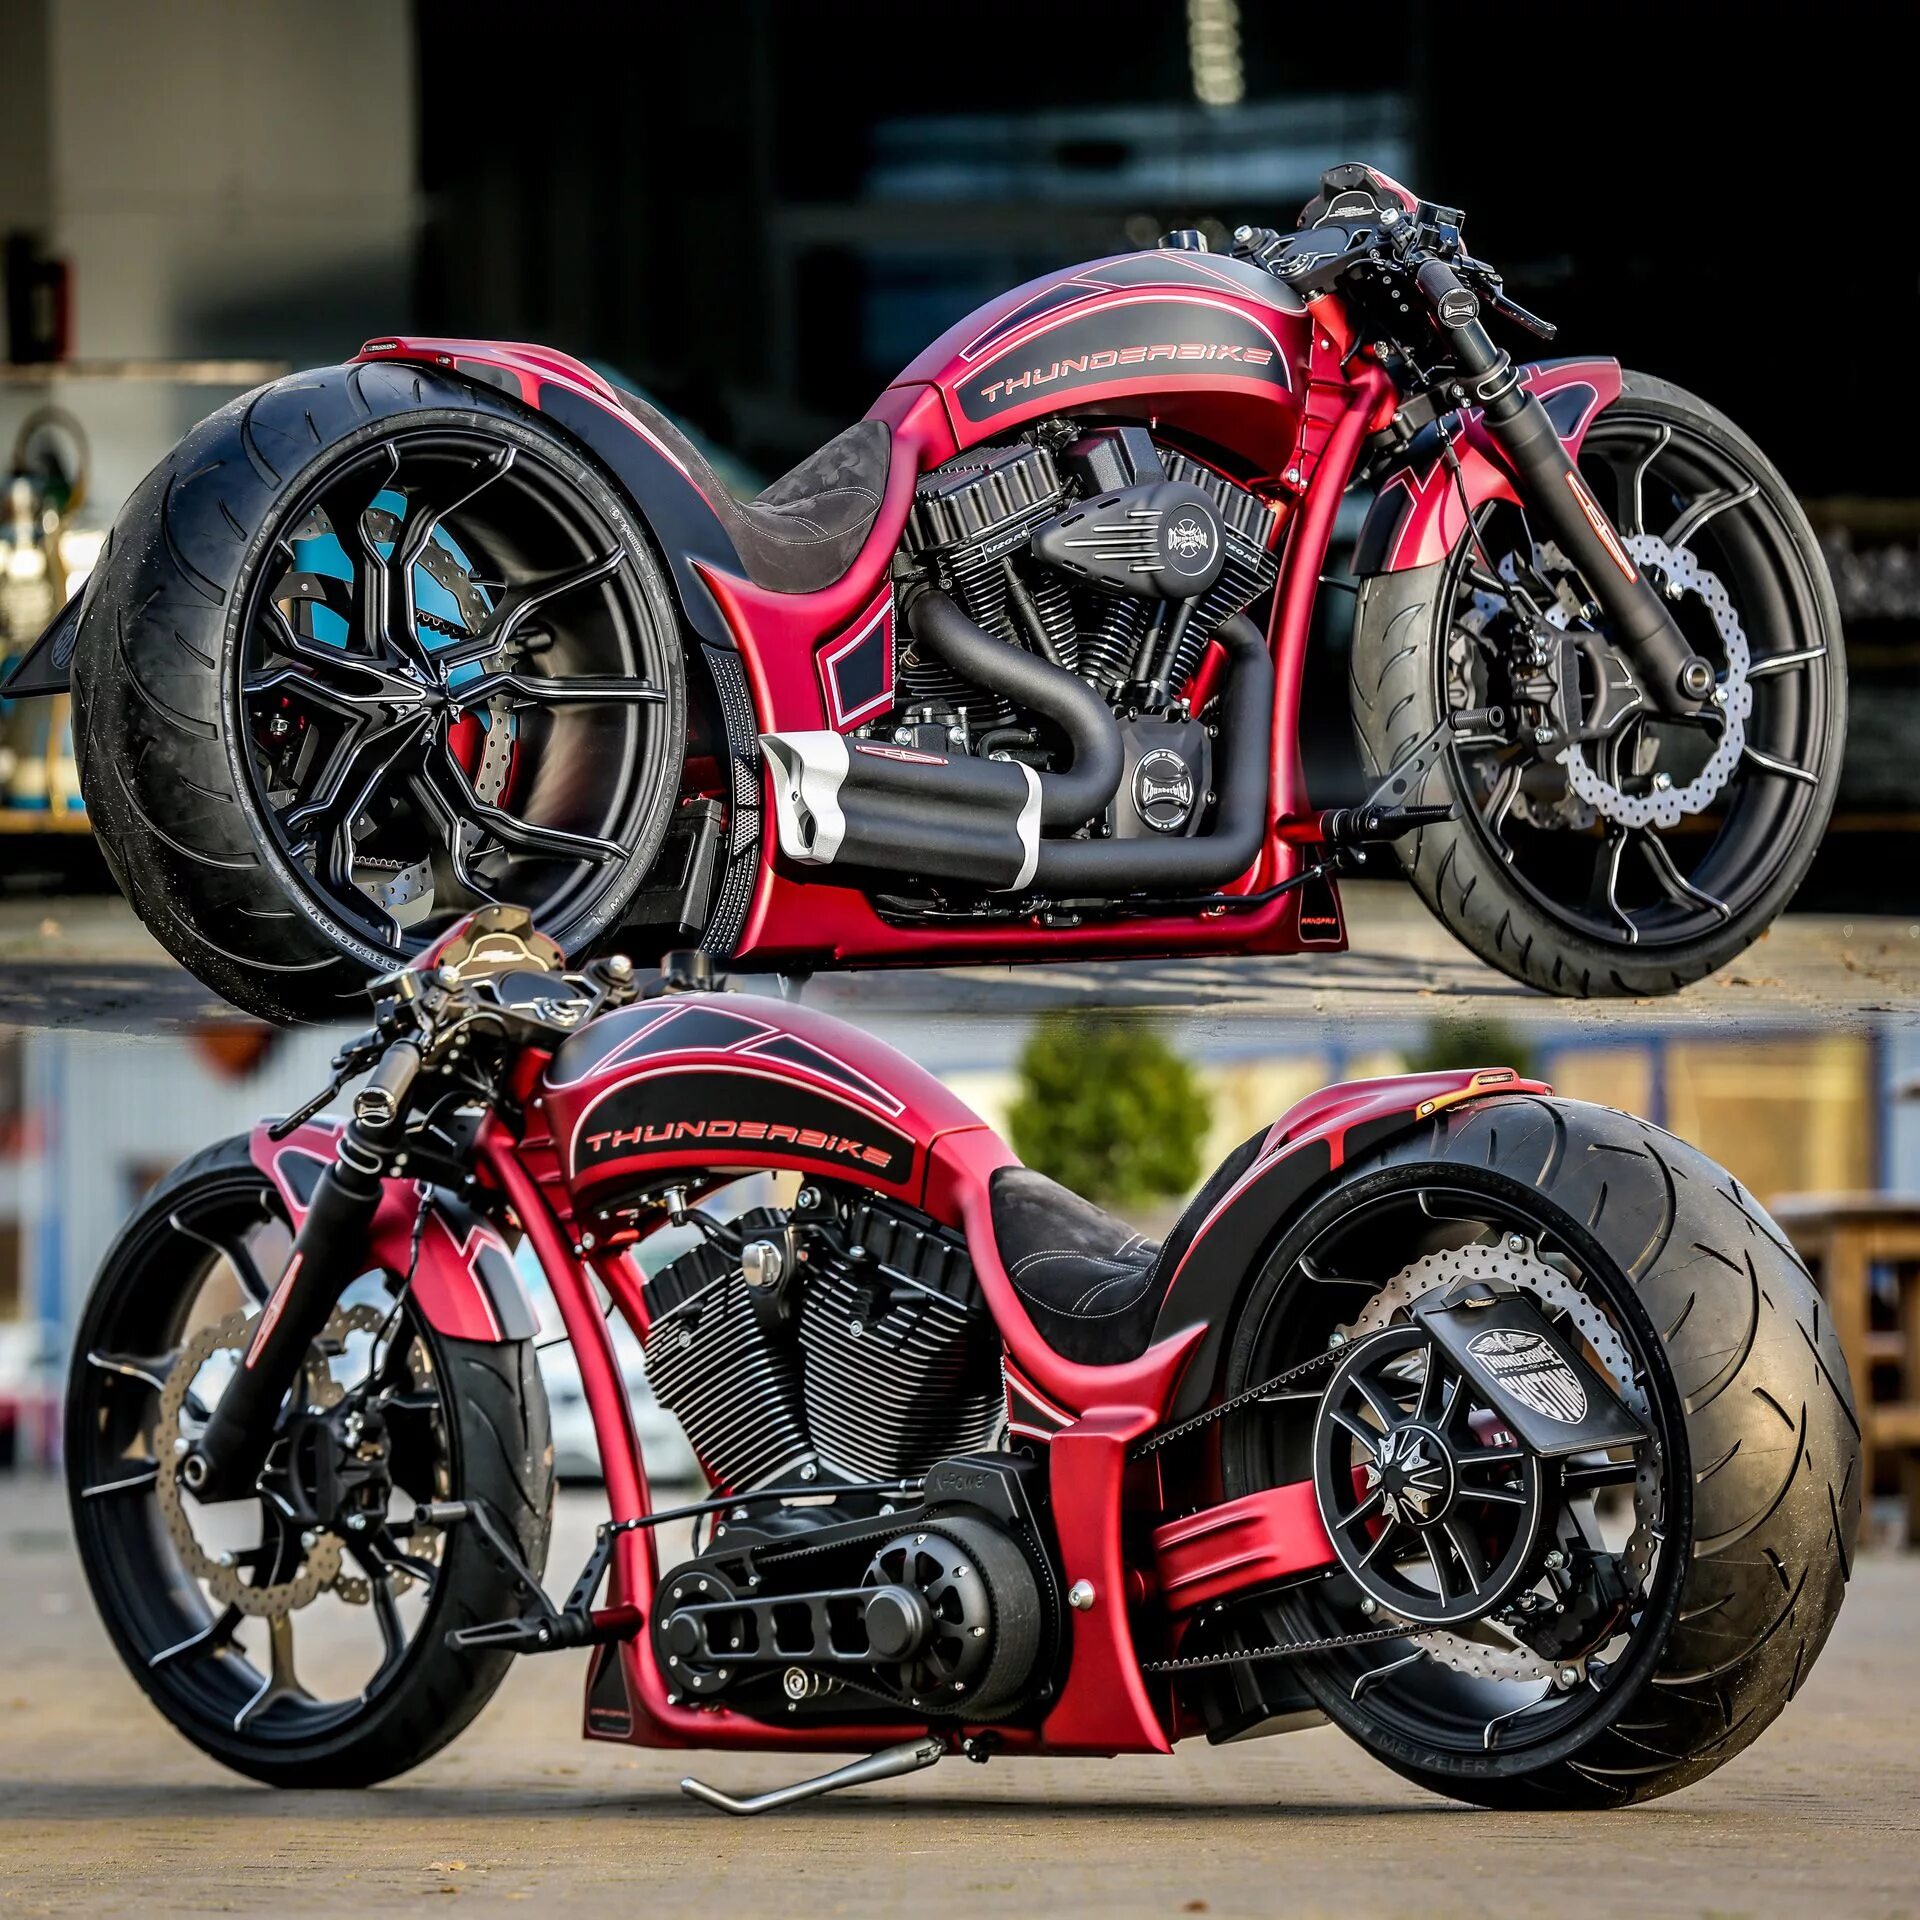 Мотоциклы Harley Davidson Thunderbike. Харлей Дэвидсон Thunderbike. Тандербайк кастом. Thunderbike Custom.